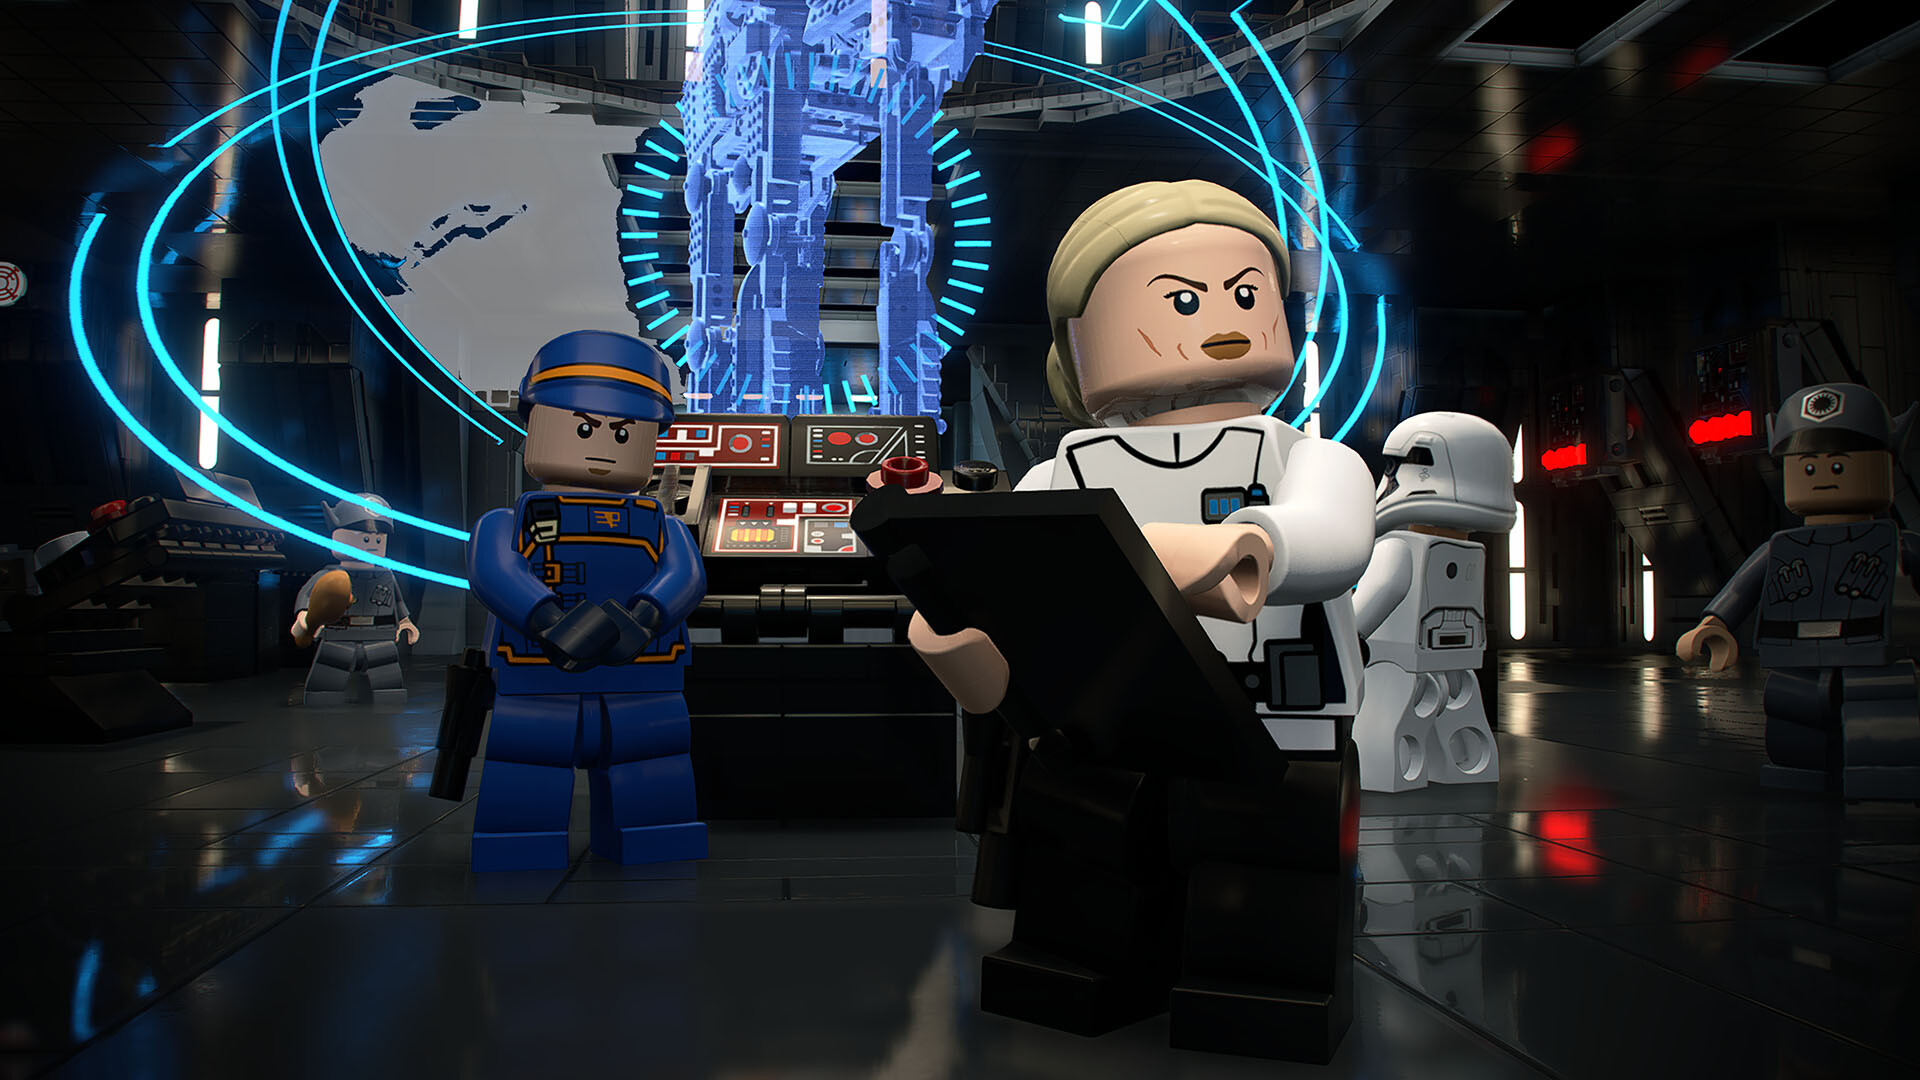 LEGO Star Wars: The Skywalker Saga - Character Collection 2 DLC Steam CD Key